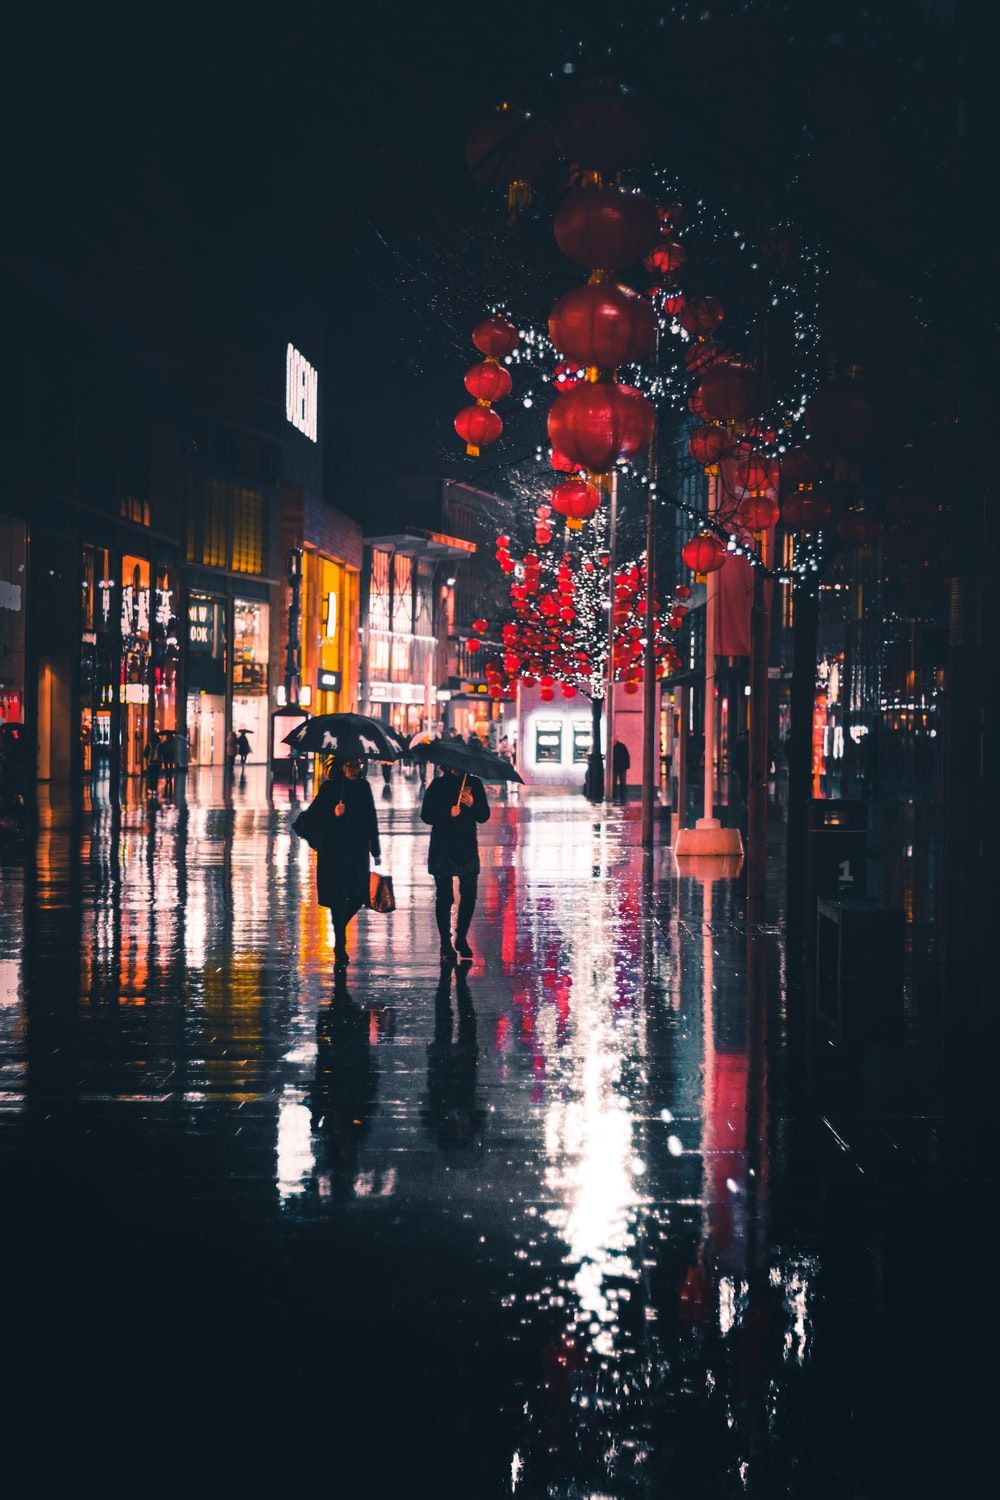 Rain City Picture. Download Free Image